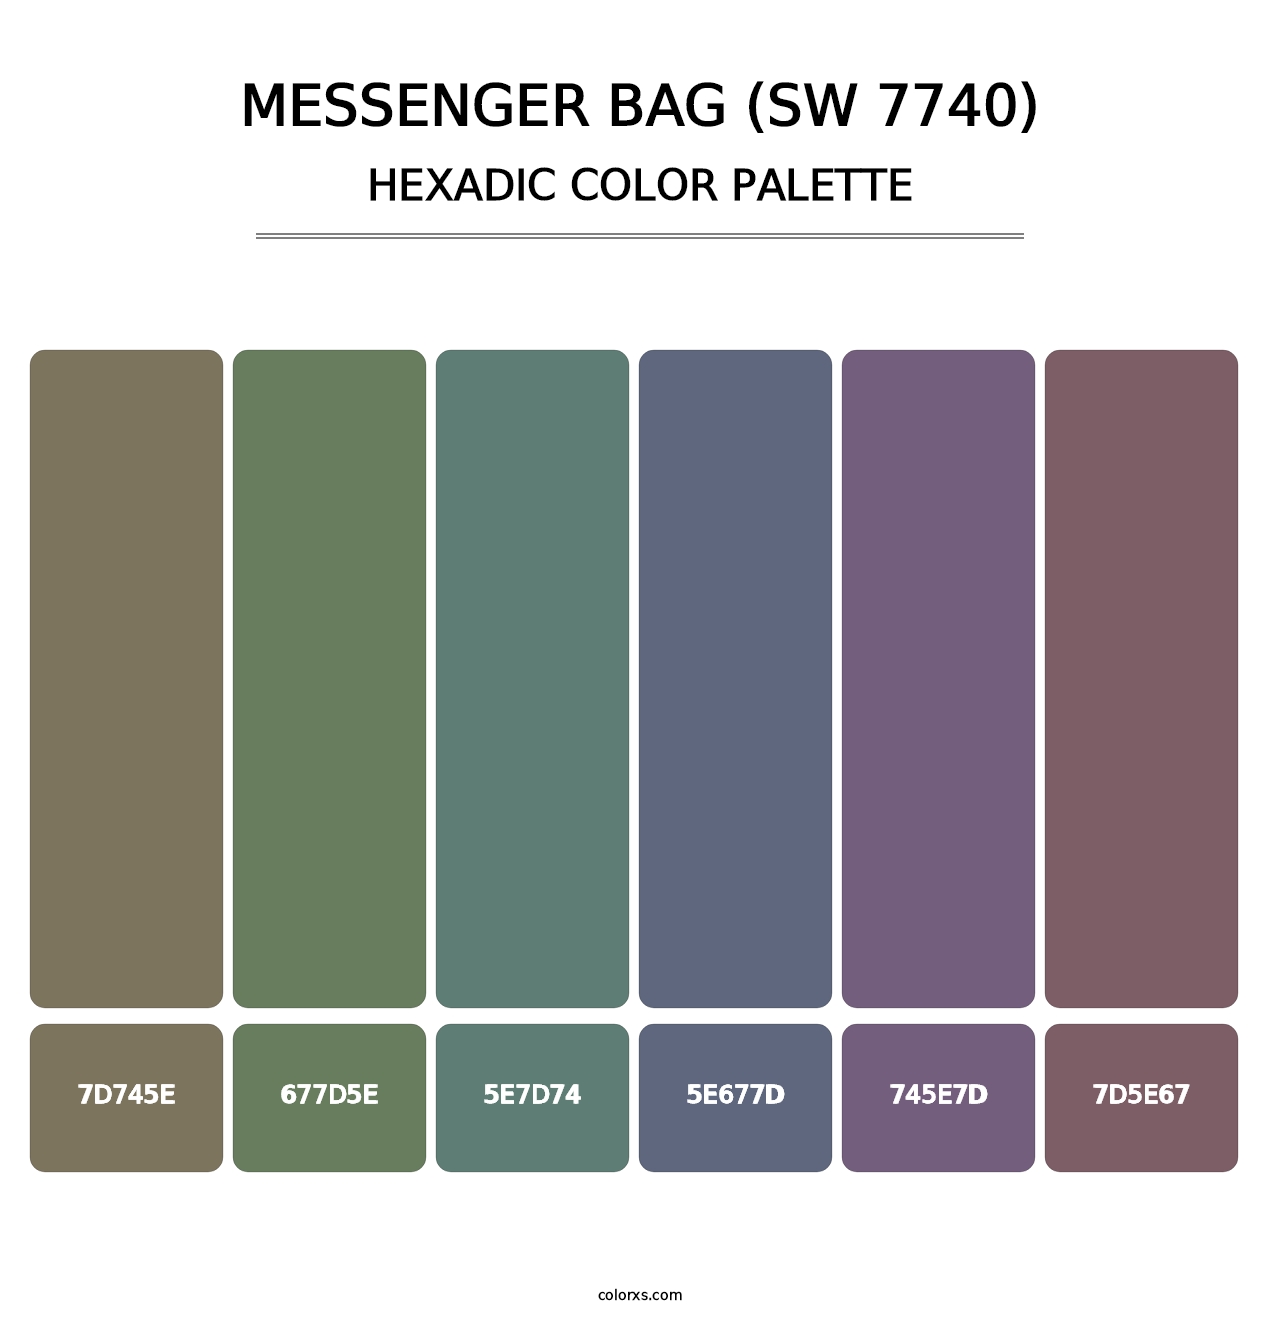 Messenger Bag (SW 7740) - Hexadic Color Palette